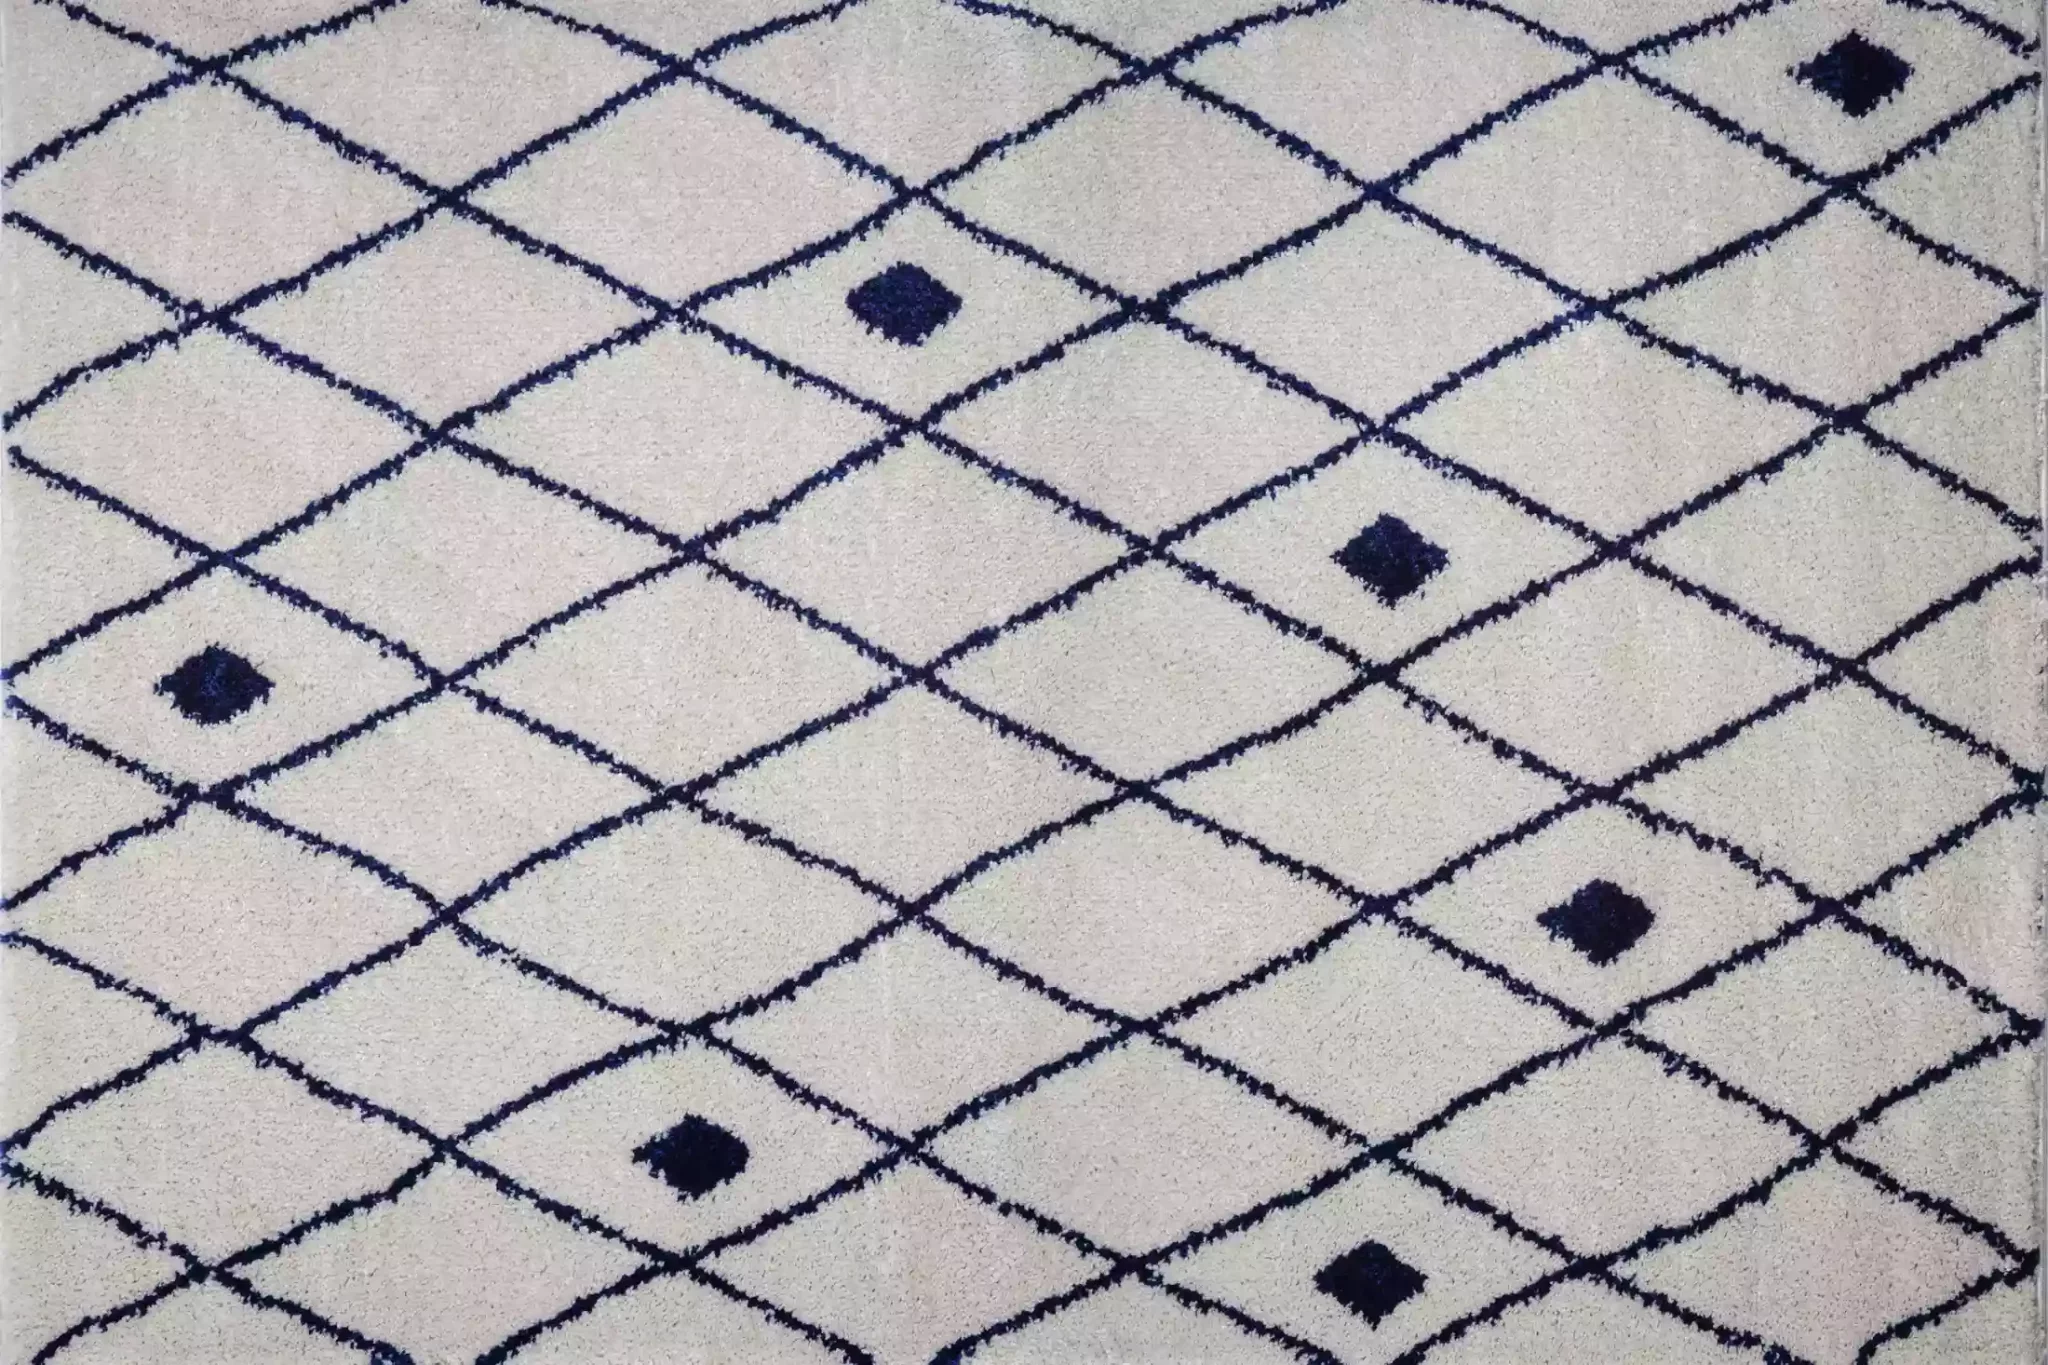 Black and white Morocco rug with geometric diamond motifs.